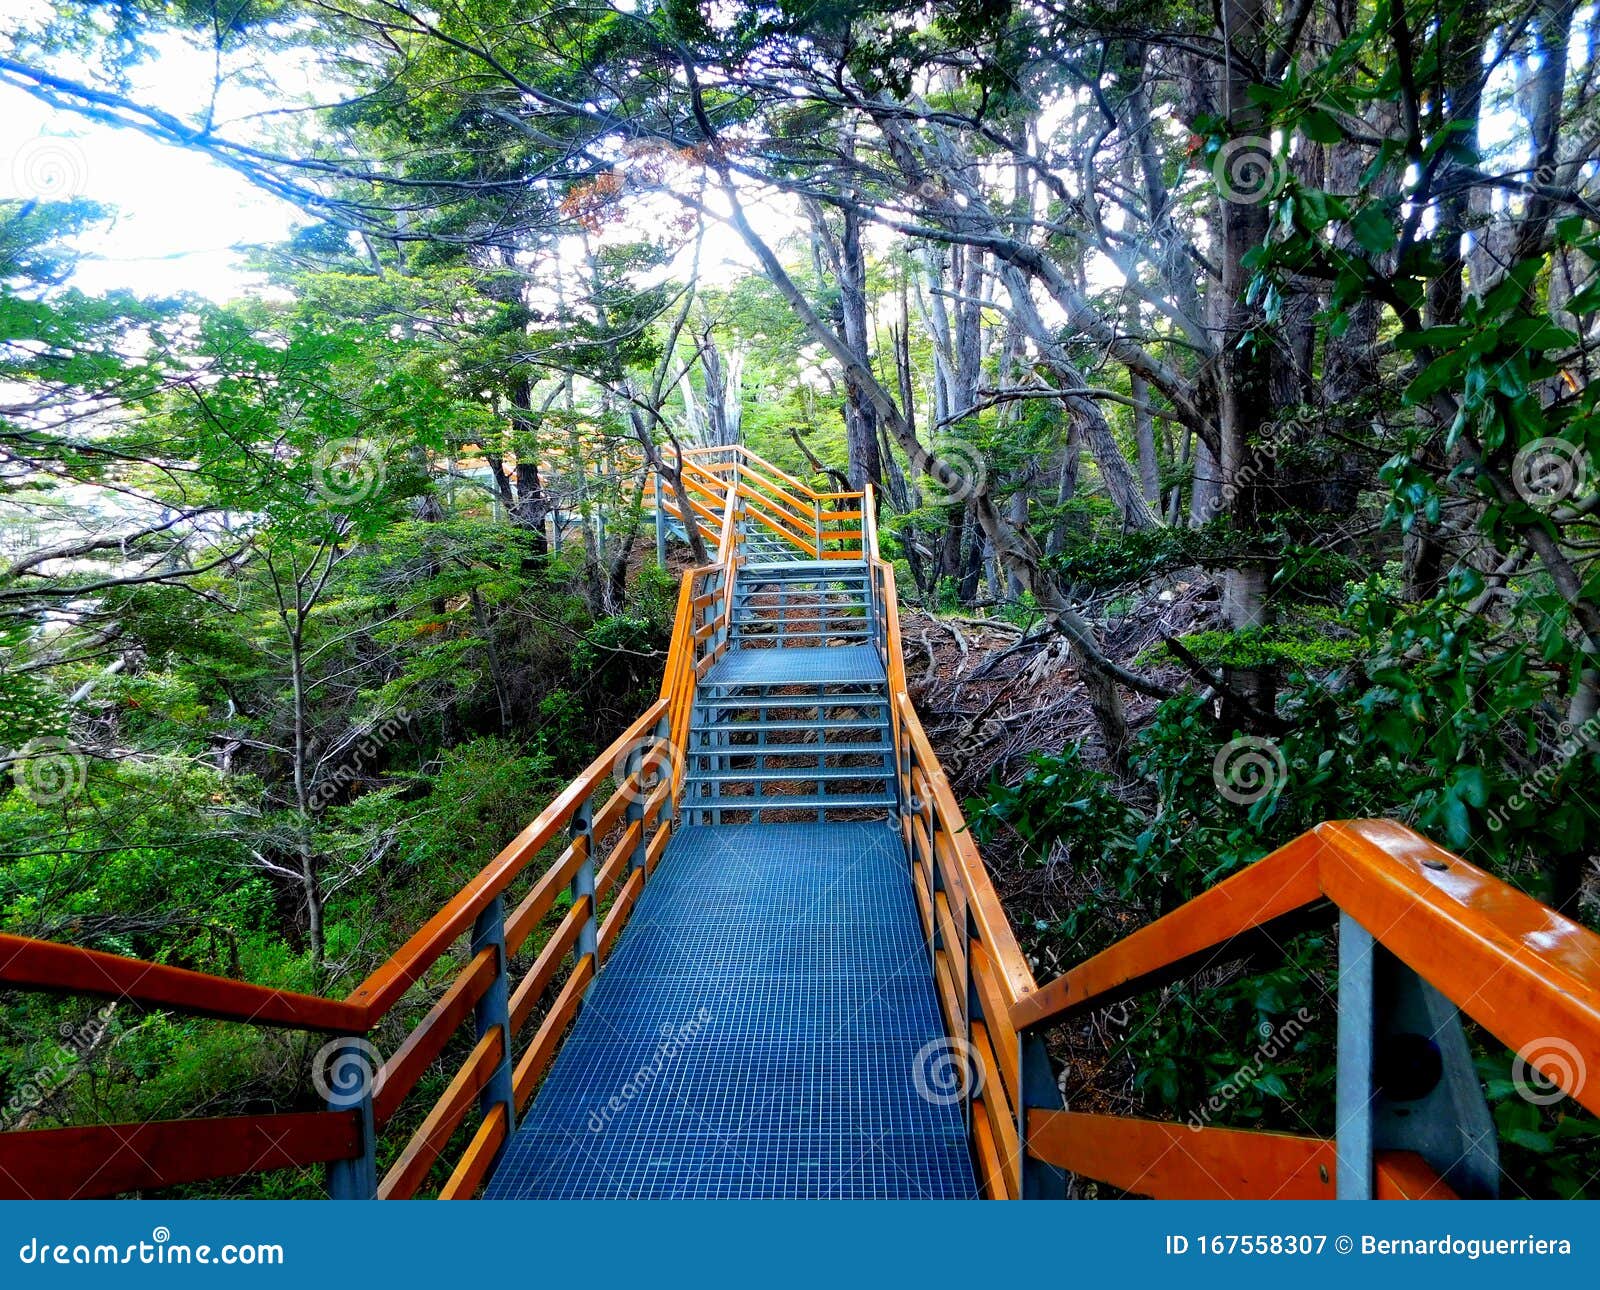 perito moreno glacier, footbridge that crosses the national park